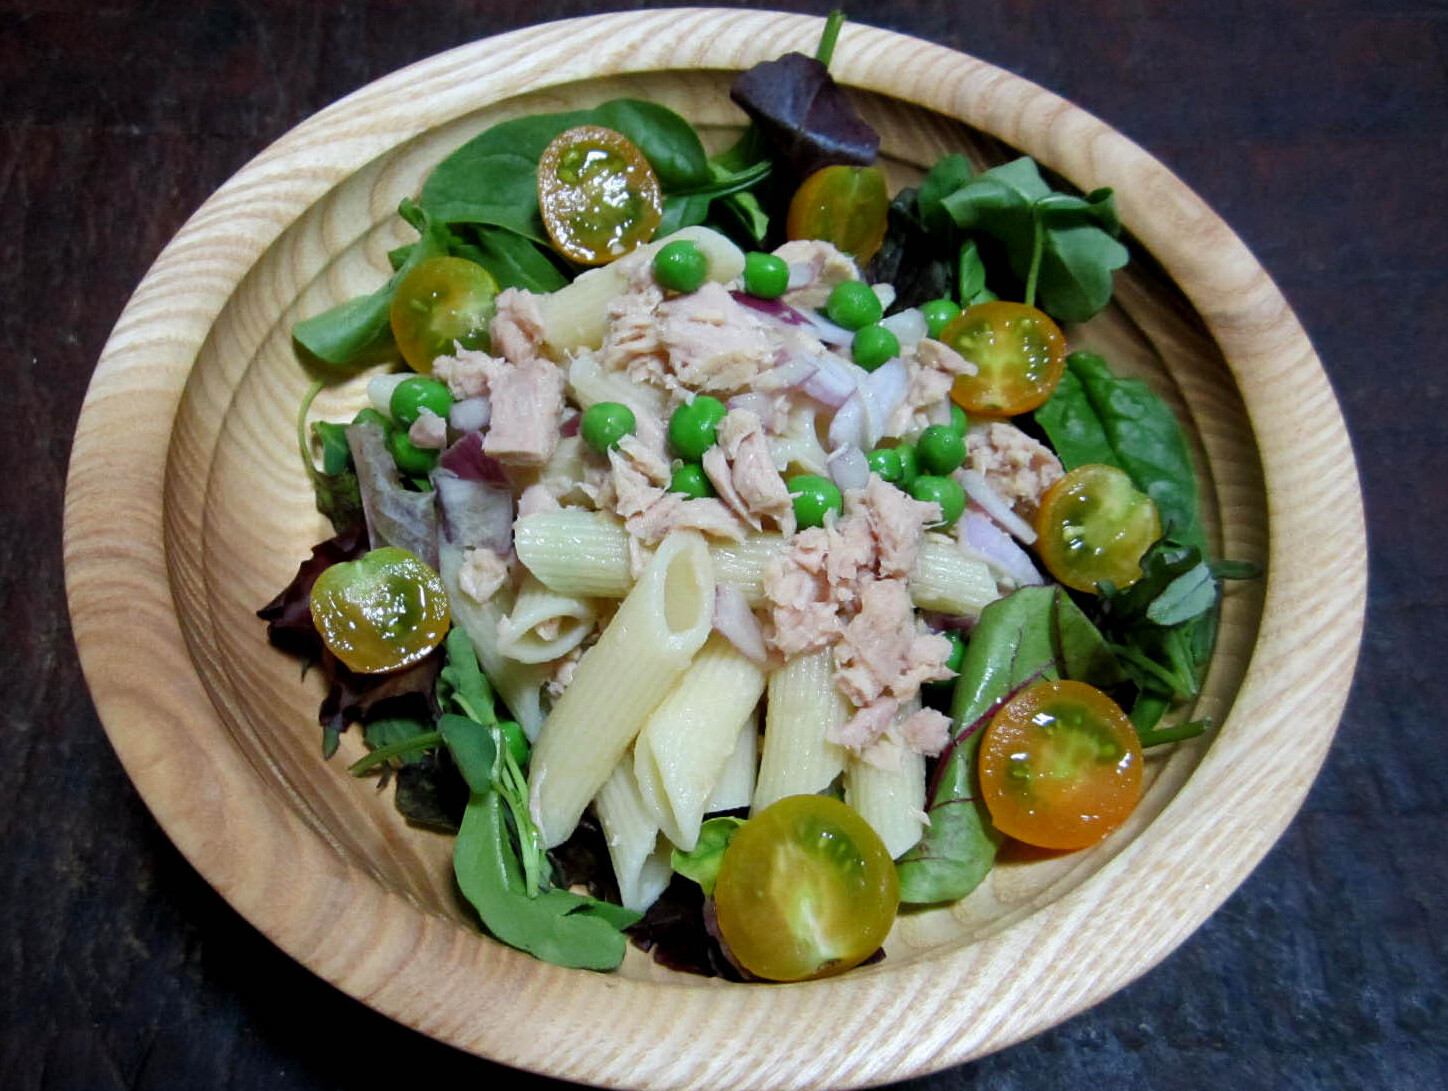 Tuna Pasta Salad